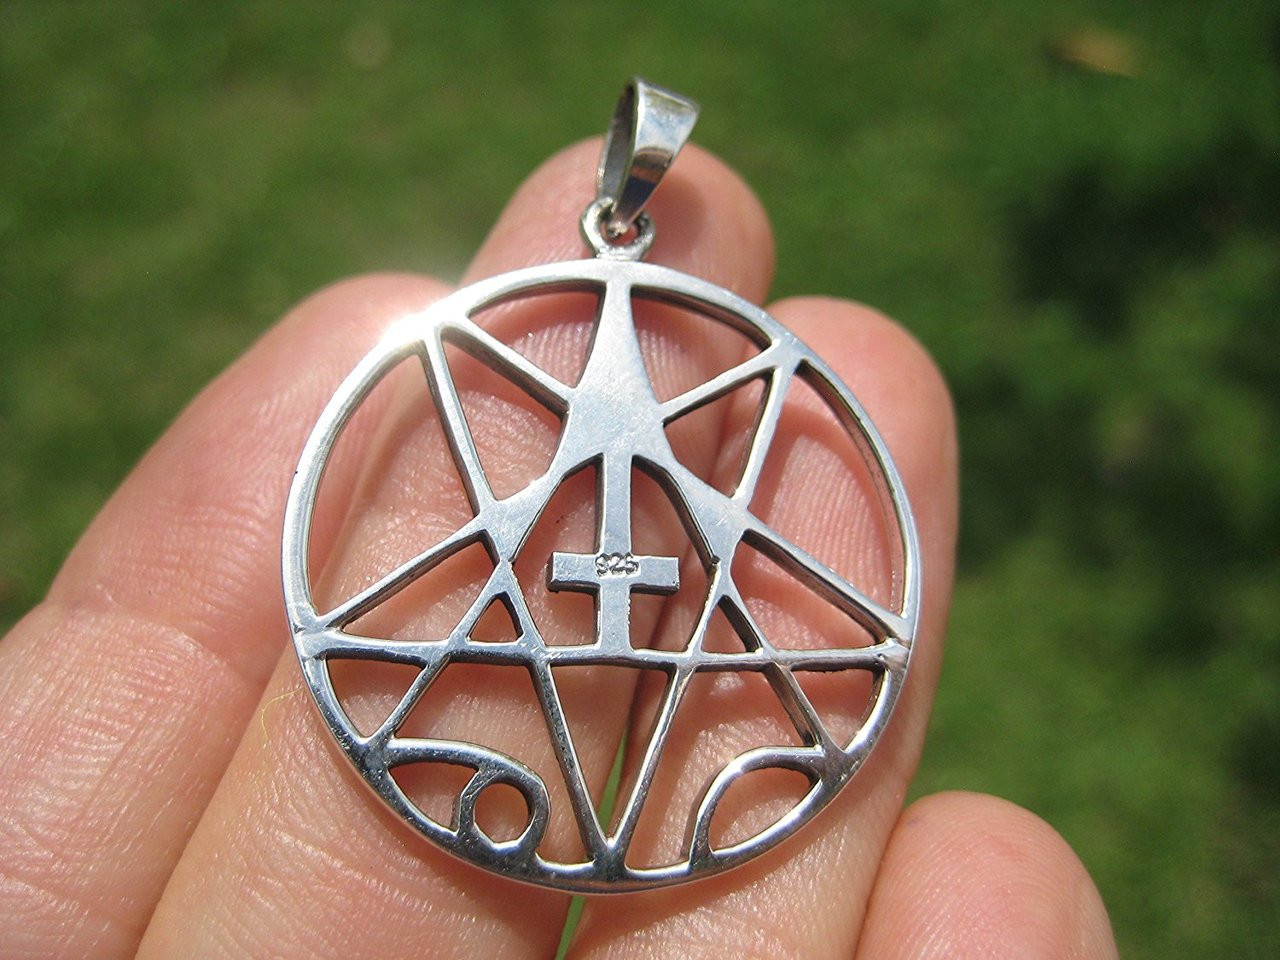 Inverted Cross & Pentagram Pendant